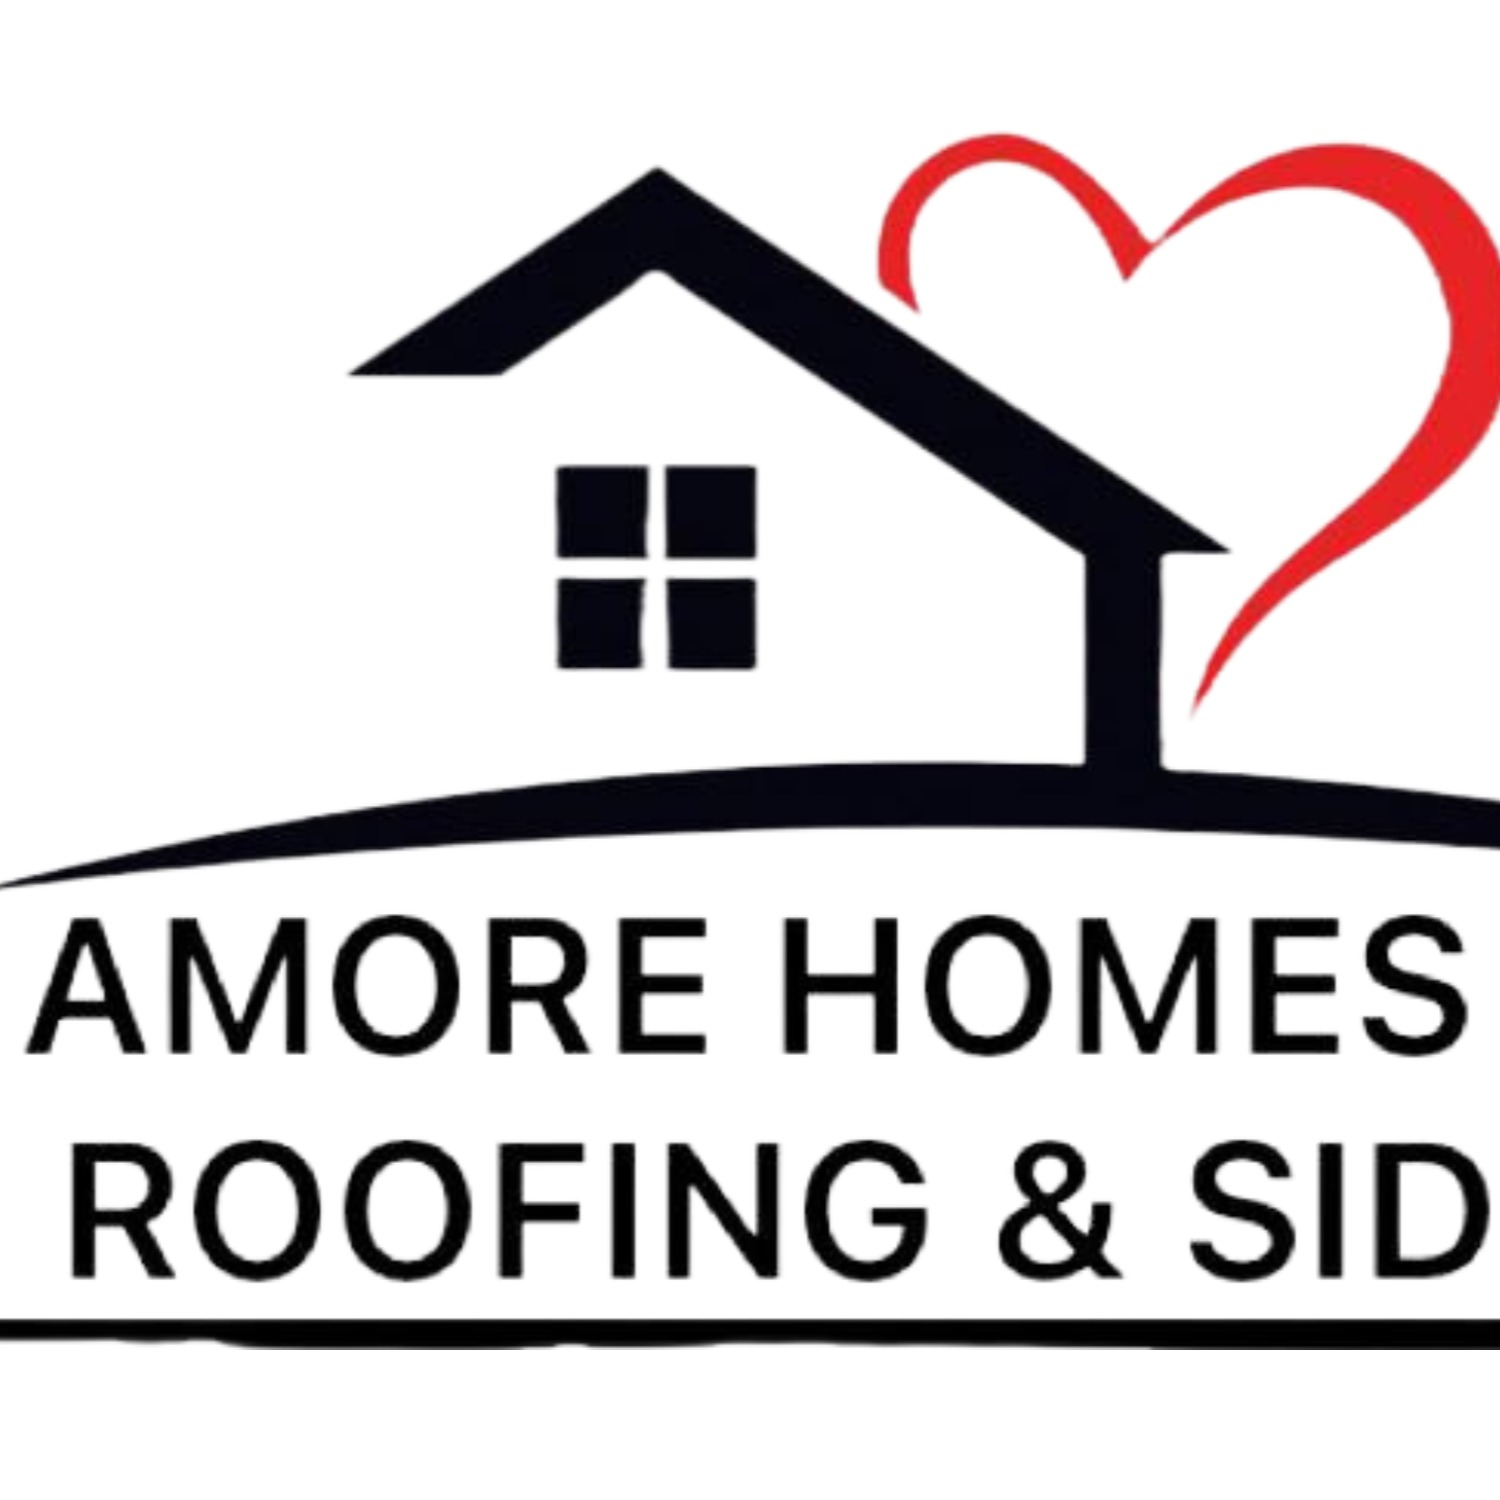 Amore Homes Roofing & Siding - Monroe Township, NJ 08831 - (732)810-9500 | ShowMeLocal.com